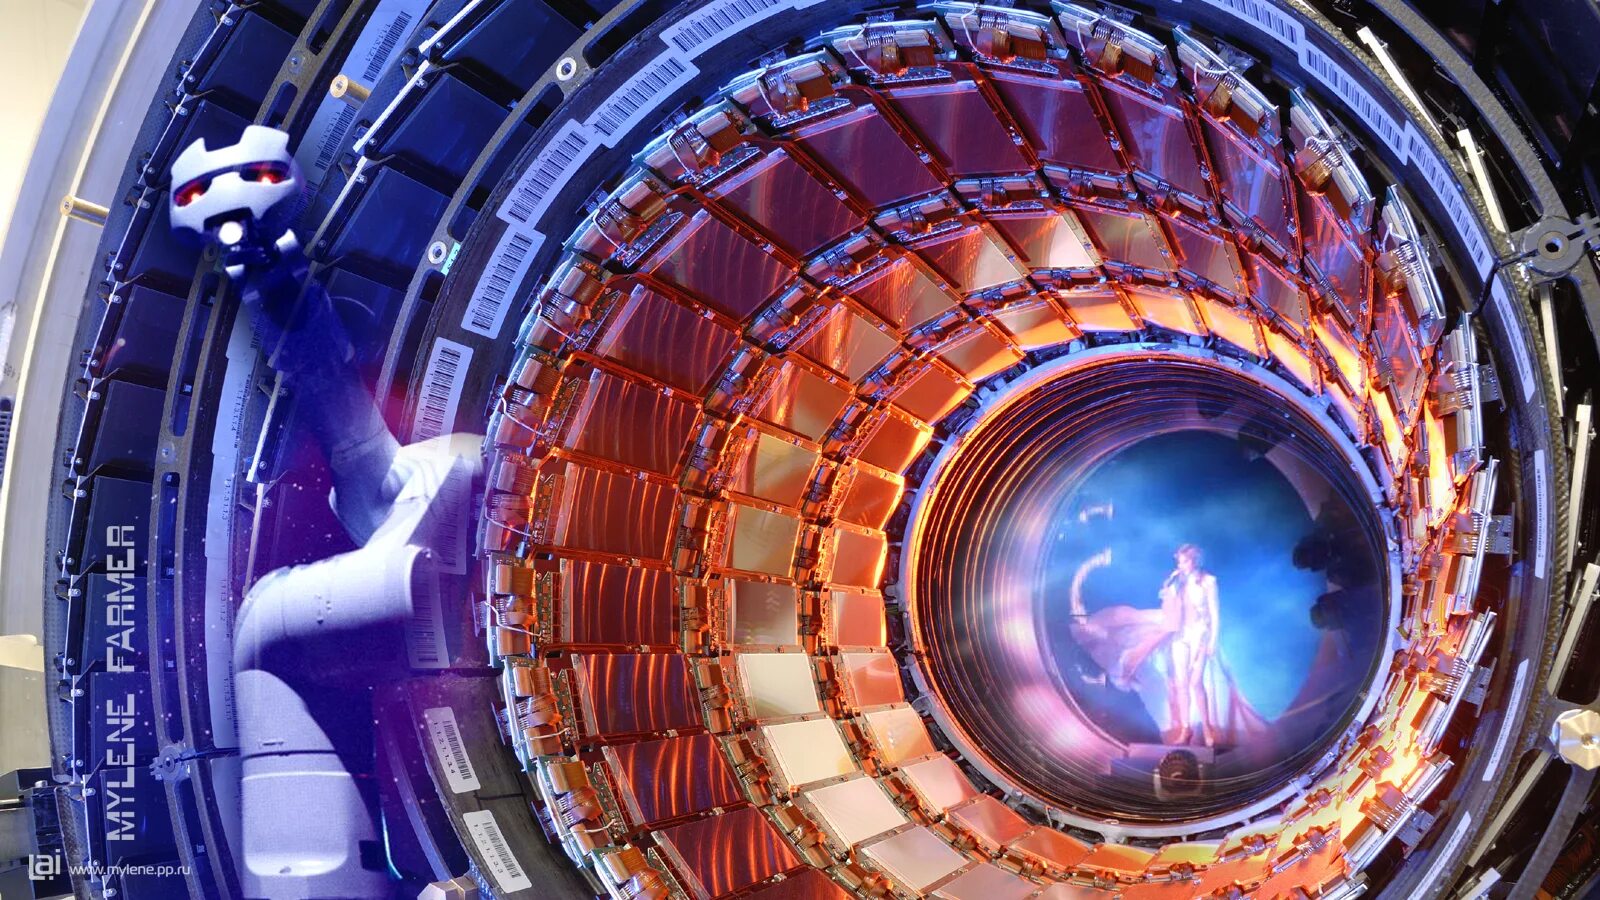 Швейцария ЦЕРН коллайдер. Адронный коллайдер в Швейцарии. Большой адронный коллайдер ЦЕРН. Бак большой адронный коллайдер. Андроидный коллайдер это